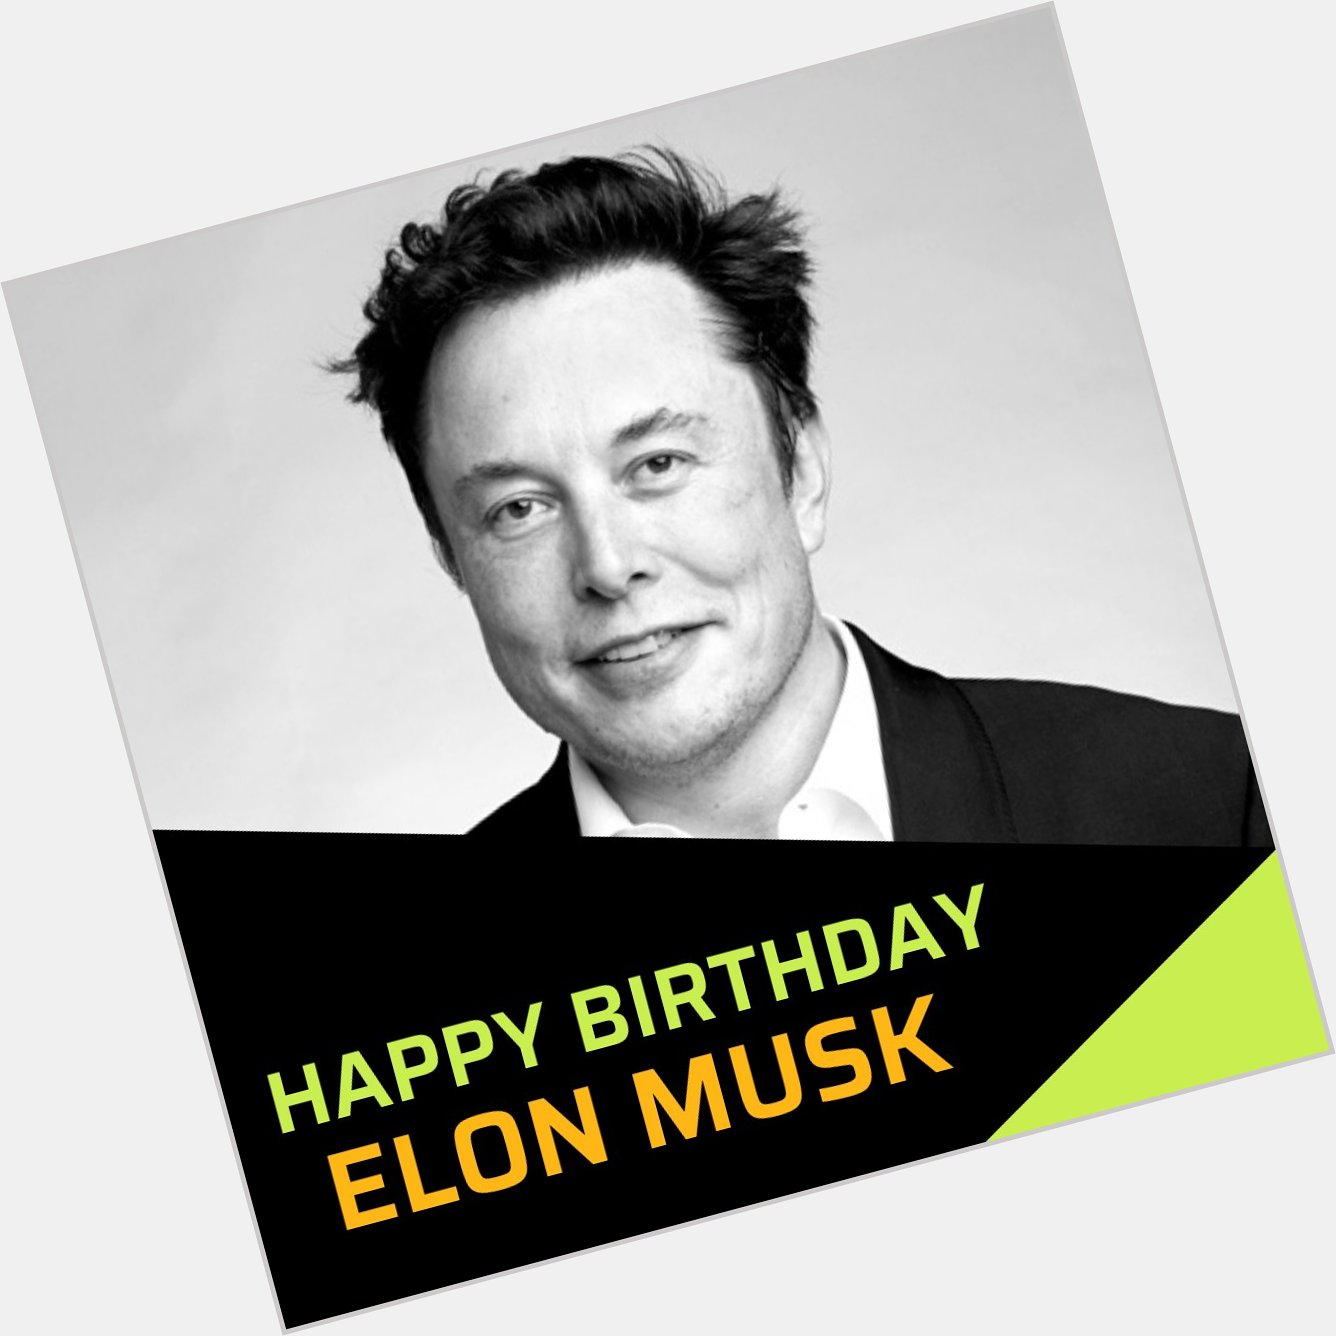 Happy Birthday Elon Musk.
.
.   